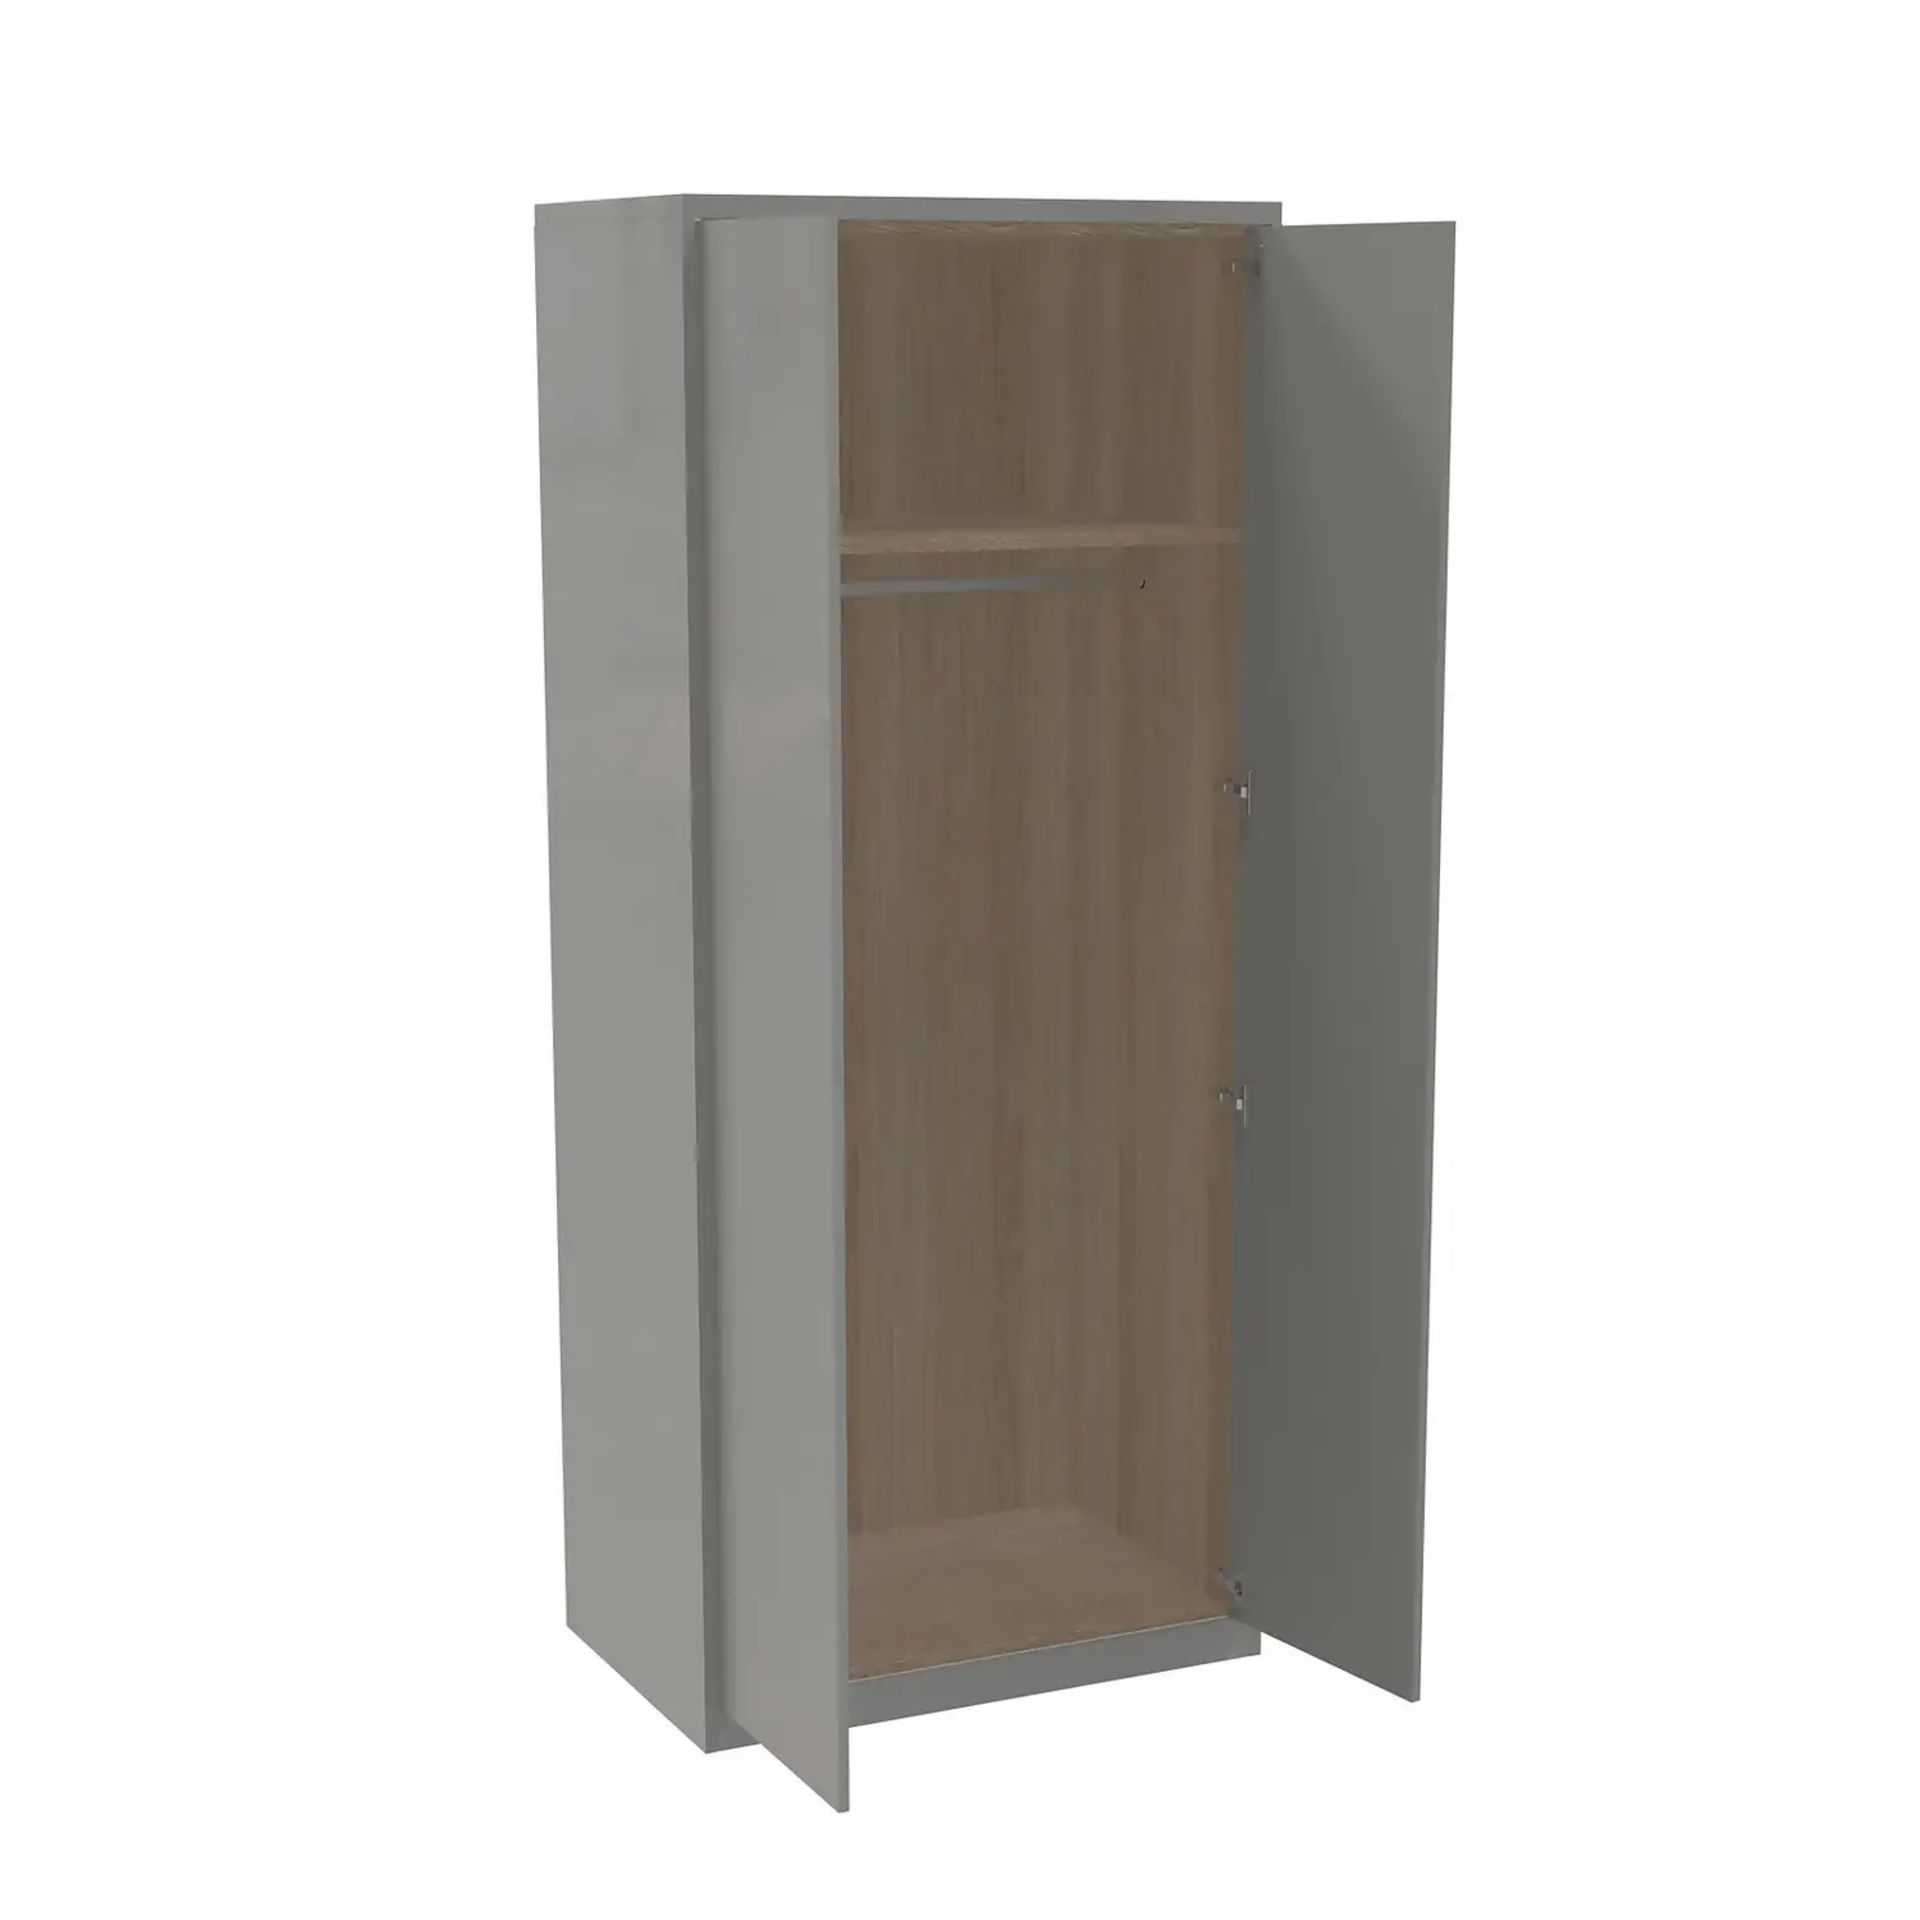 1 x Modular Bedroom: Double Grey Wardrobe - 2220mm x 900mm (RRP PER UNIT - £350) - Image 3 of 3